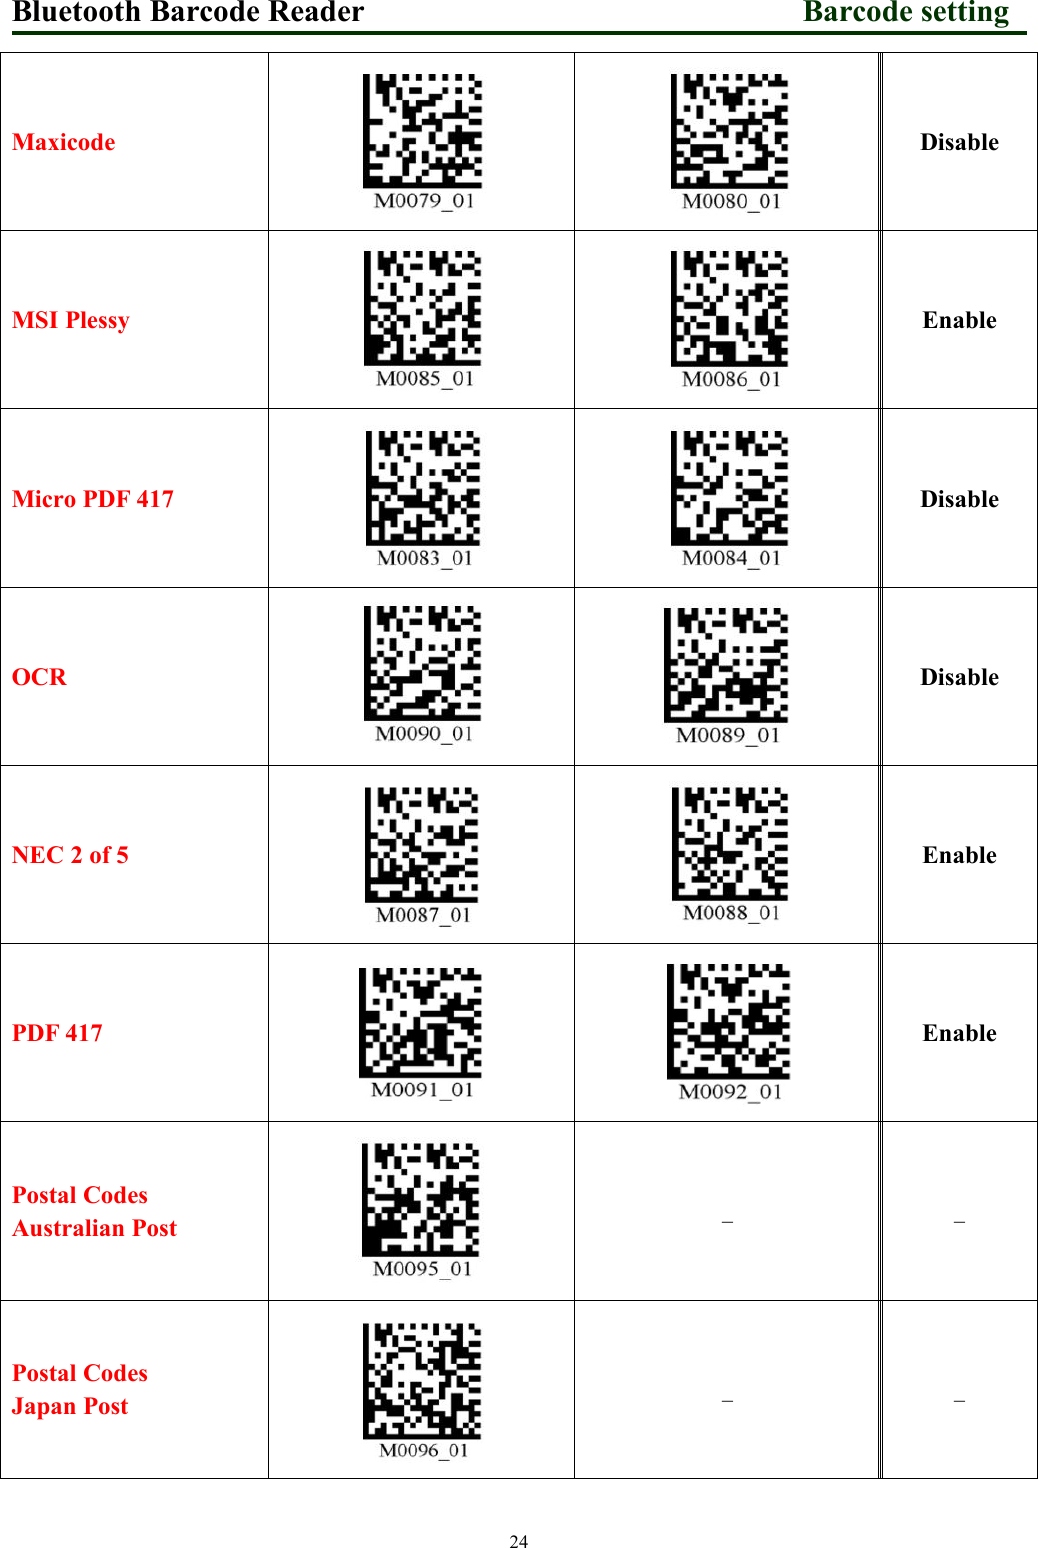 Bluetooth Barcode Reader Barcode setting24MaxicodeDisableMSI PlessyEnableMicro PDF 417DisableOCRDisableNEC 2 of 5EnablePDF 417EnablePostal CodesAustralian Post__Postal CodesJapan Post__